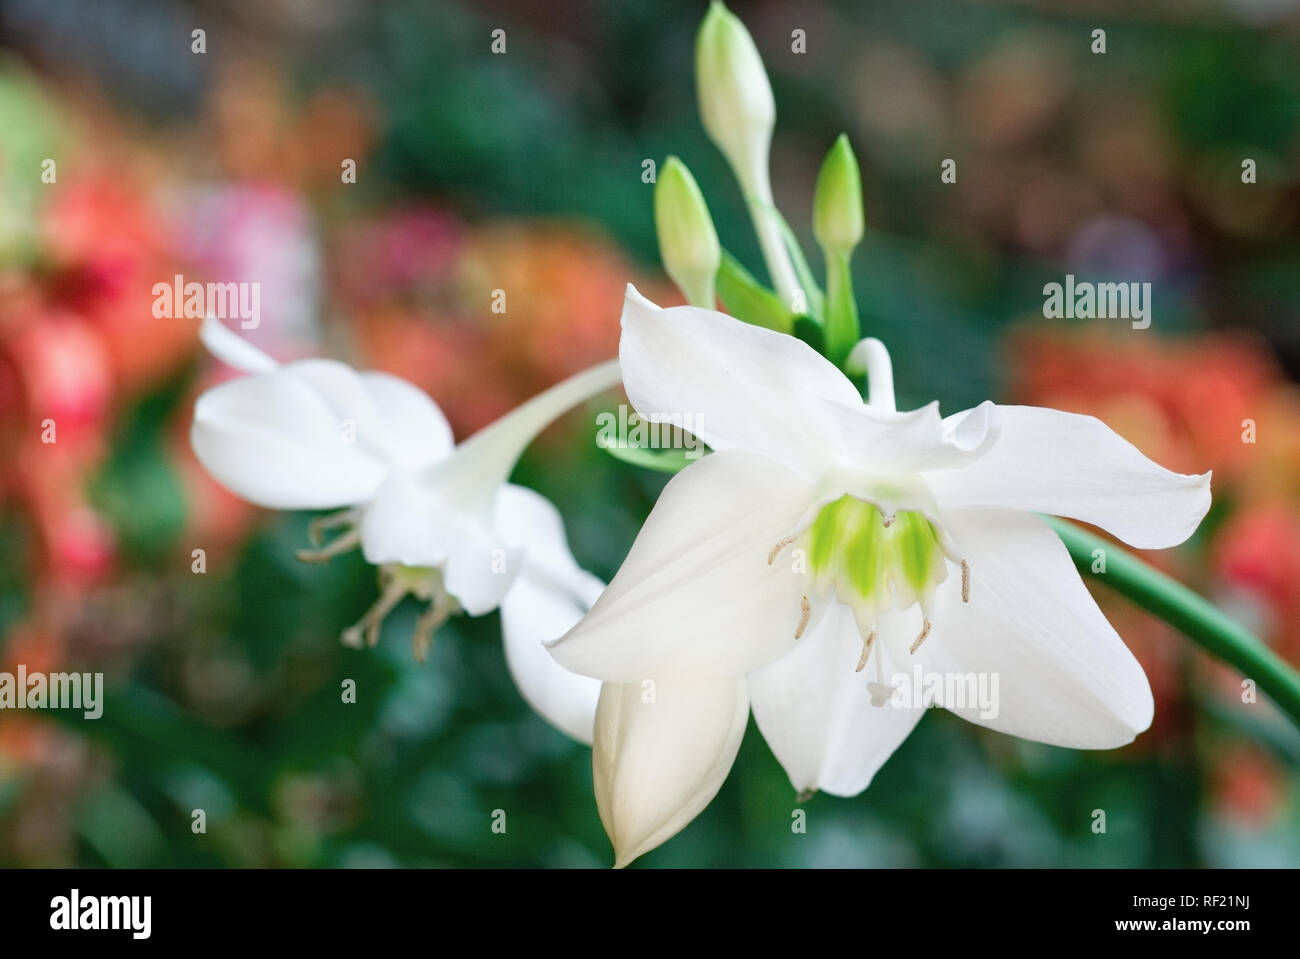 beautiful white flowers bells close-up Stock Photo